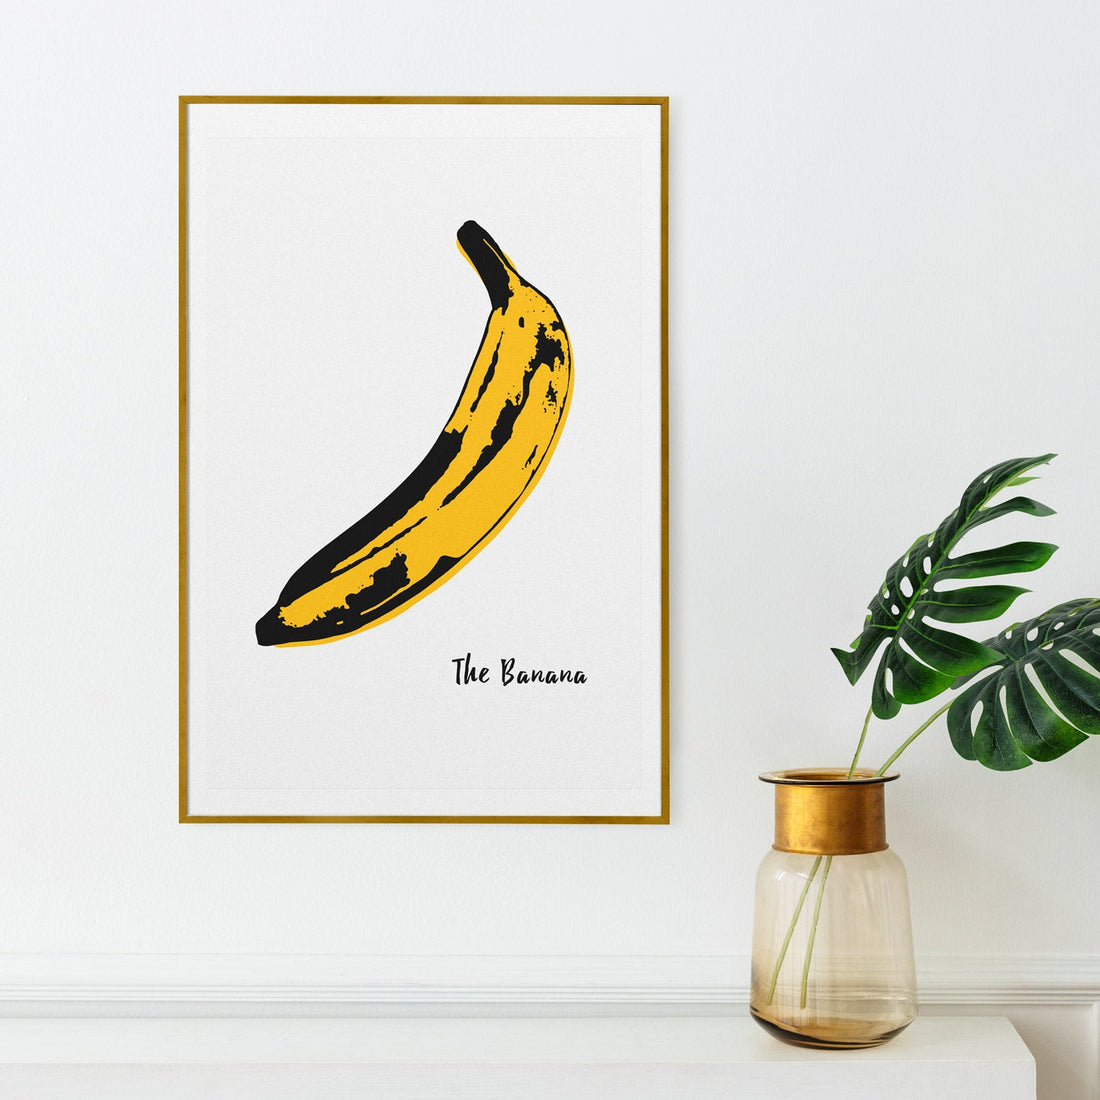 Home decor with banana drawing poster